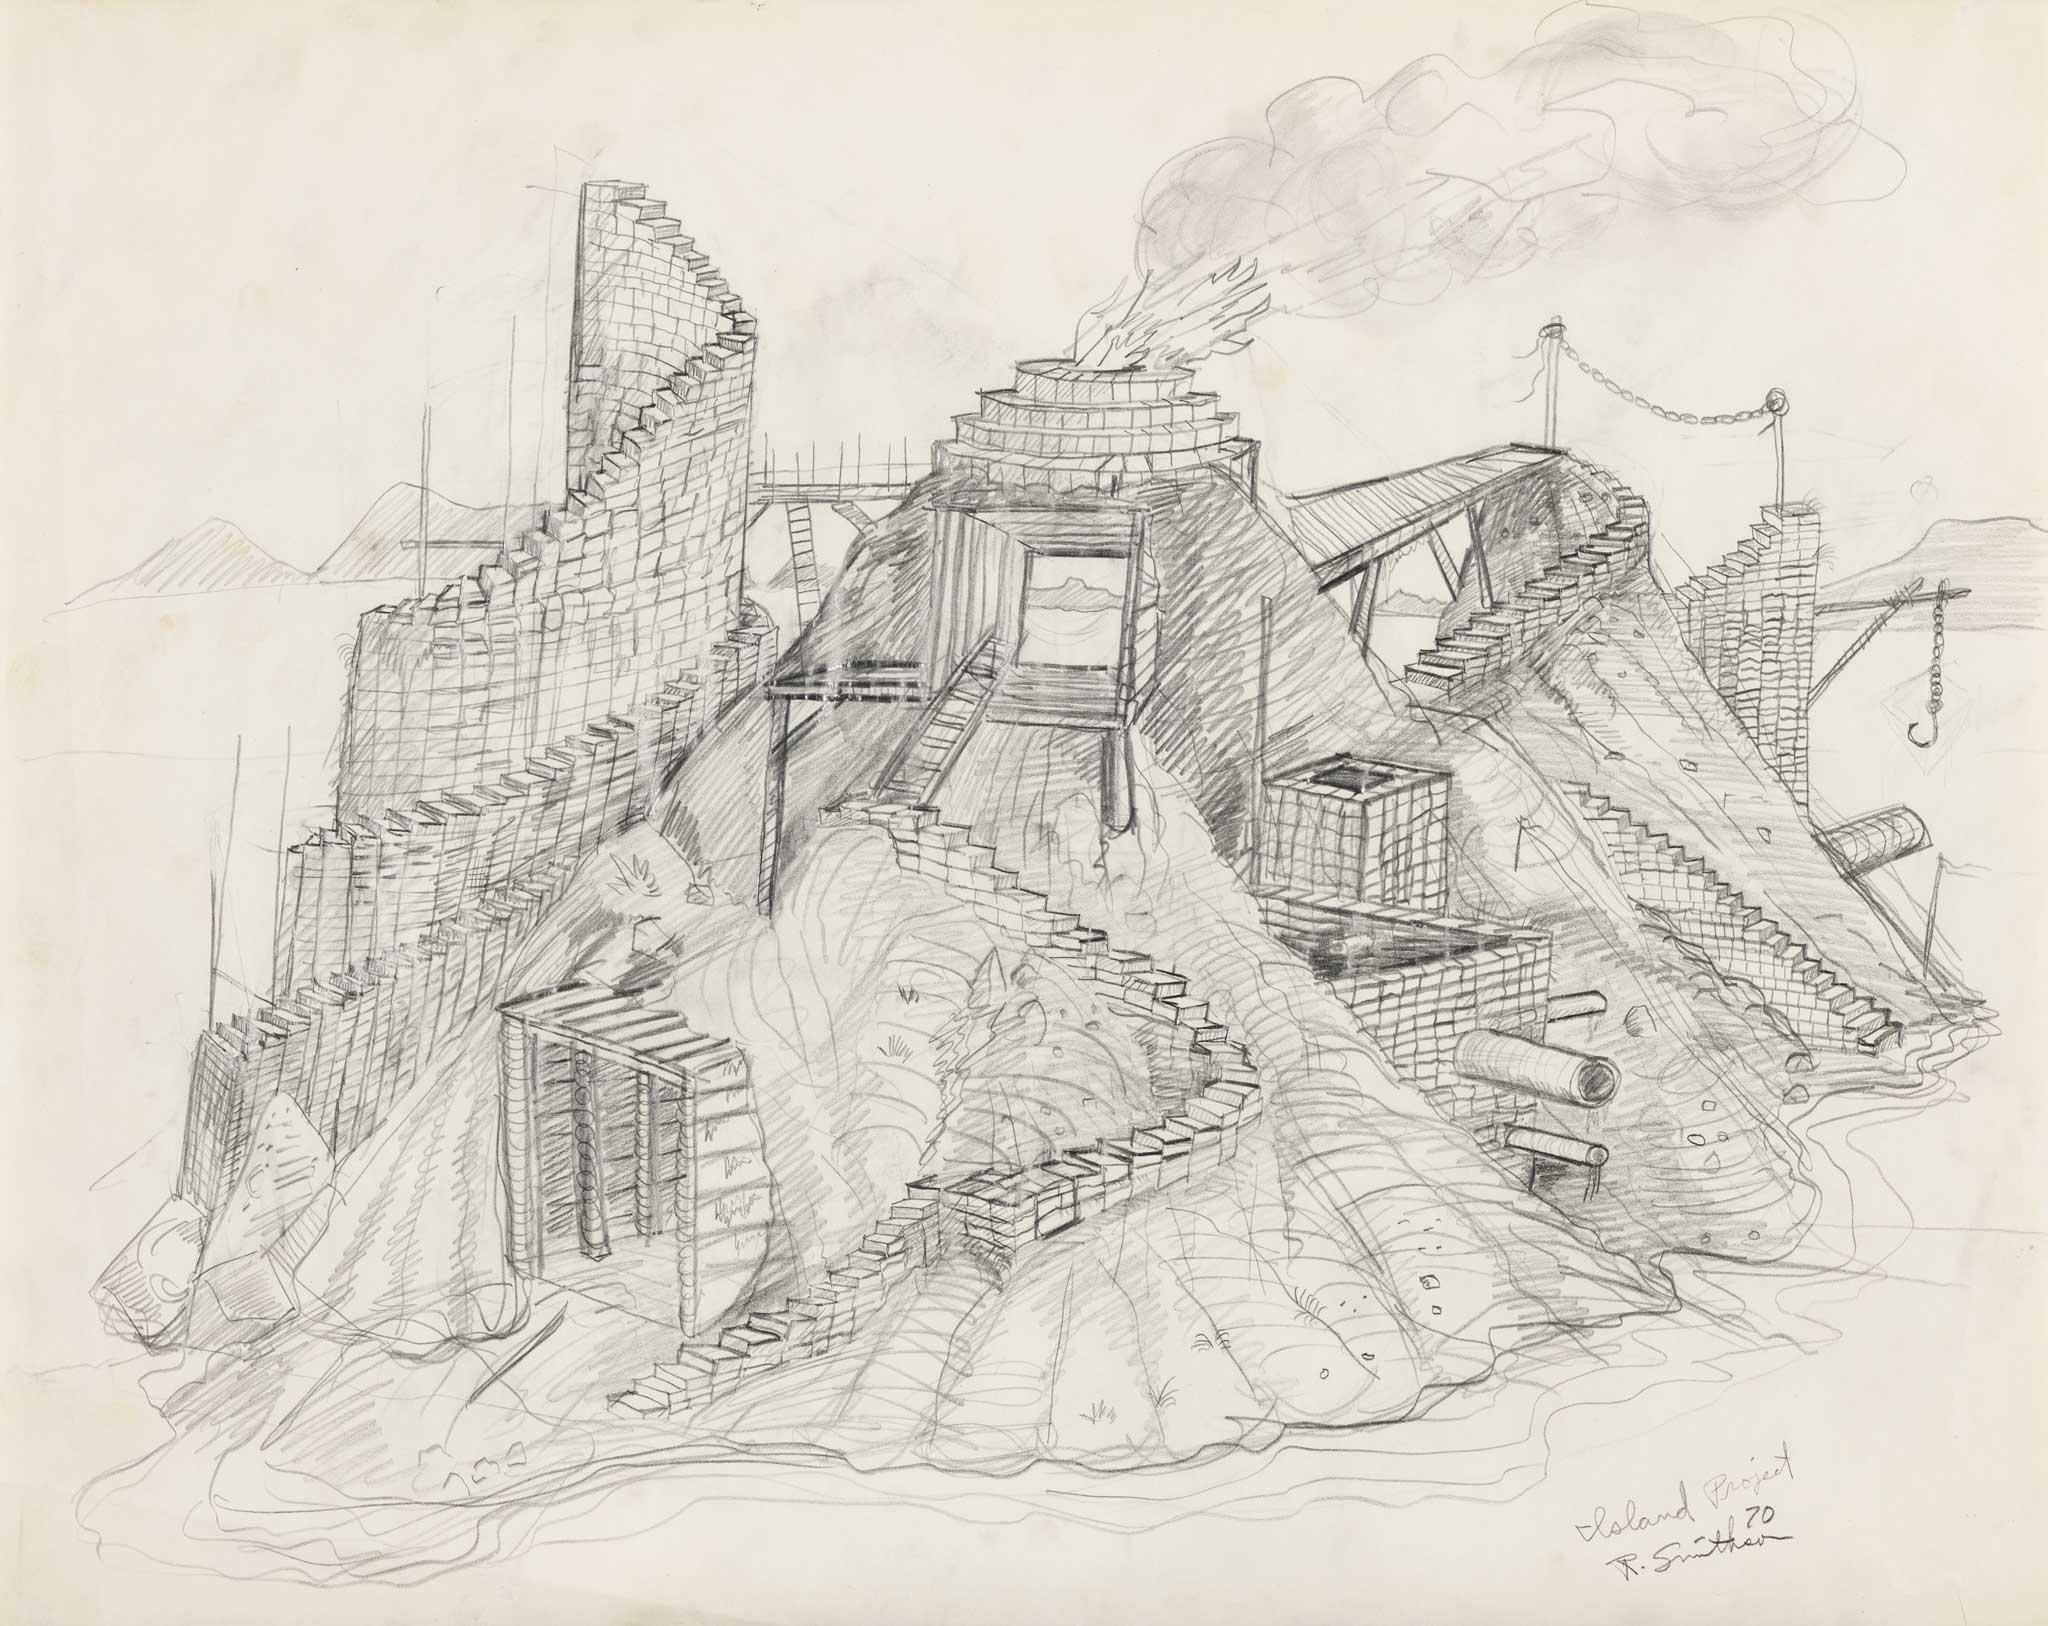 <p>“Concrete Habitat on Miami Islet Drawing” Robert Smithson, 1970</p>